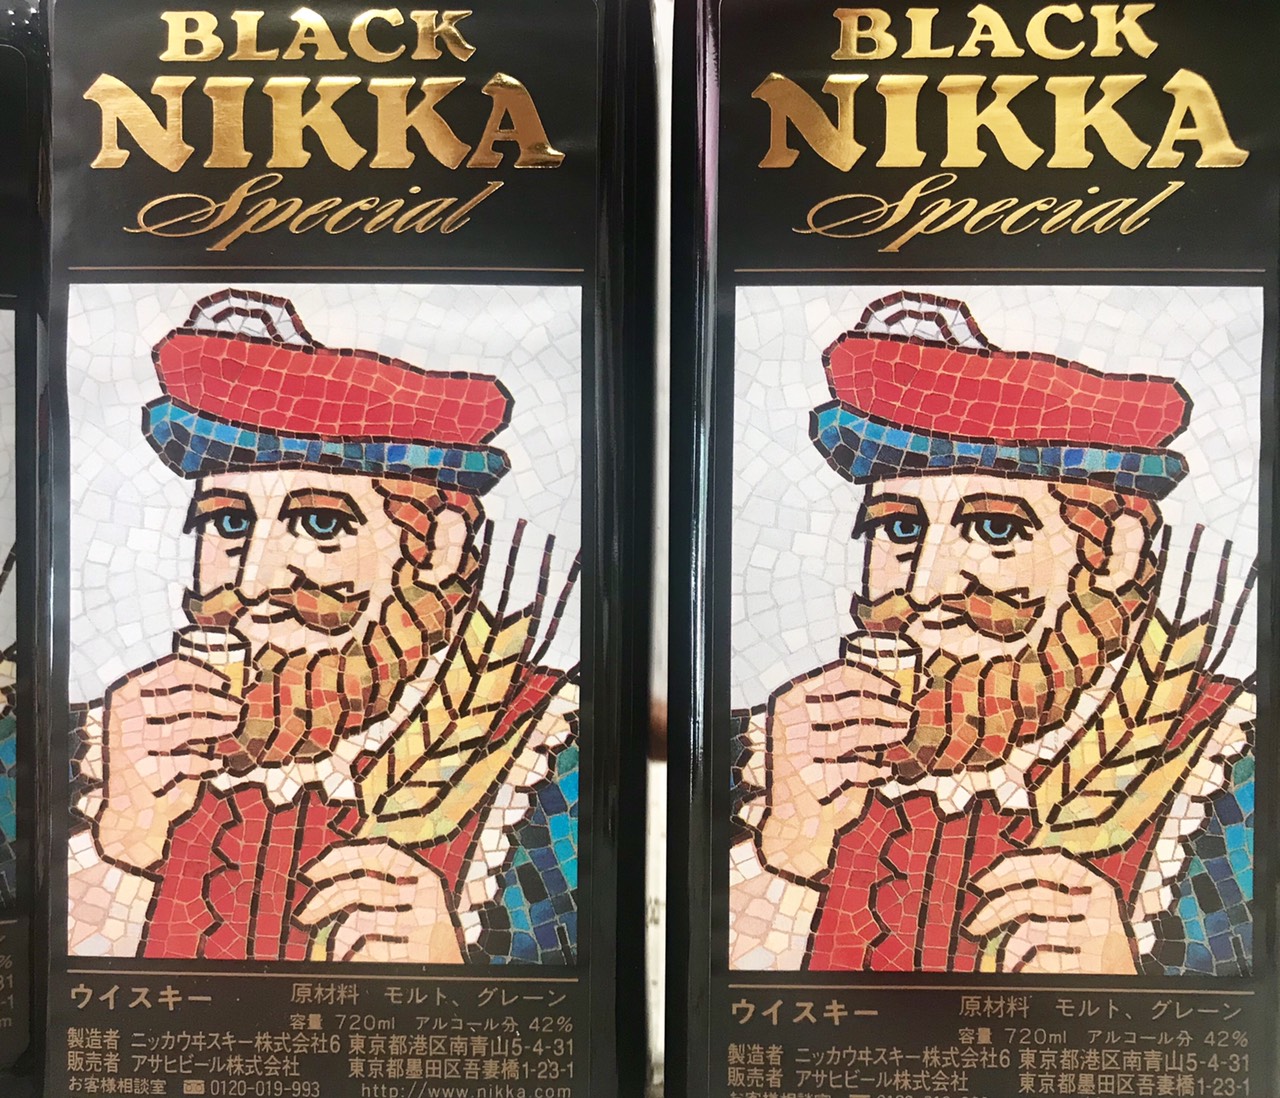  Black Nikka Special